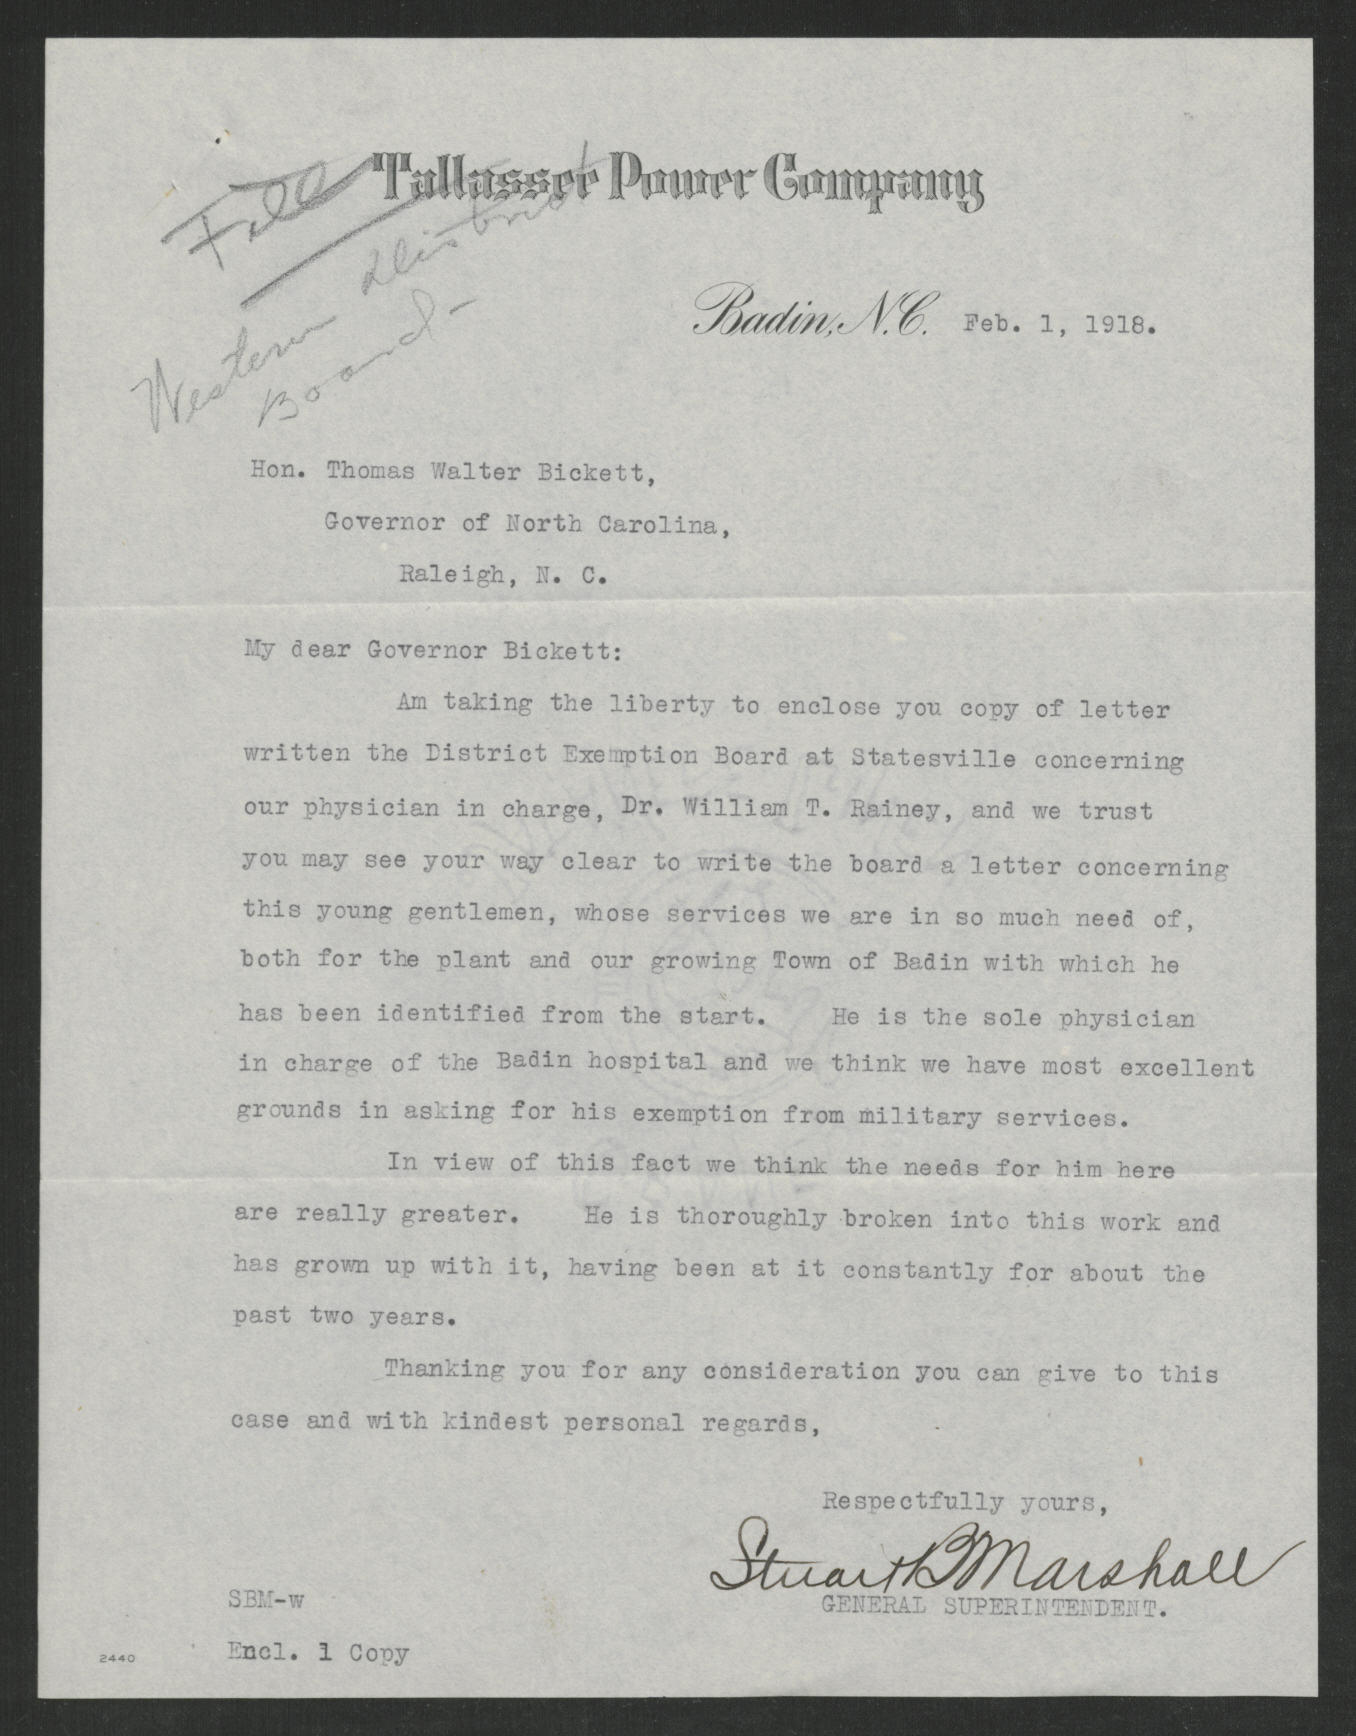 Letter from Stuart B. Marshall to Thomas W. Bickett, February 1, 1918